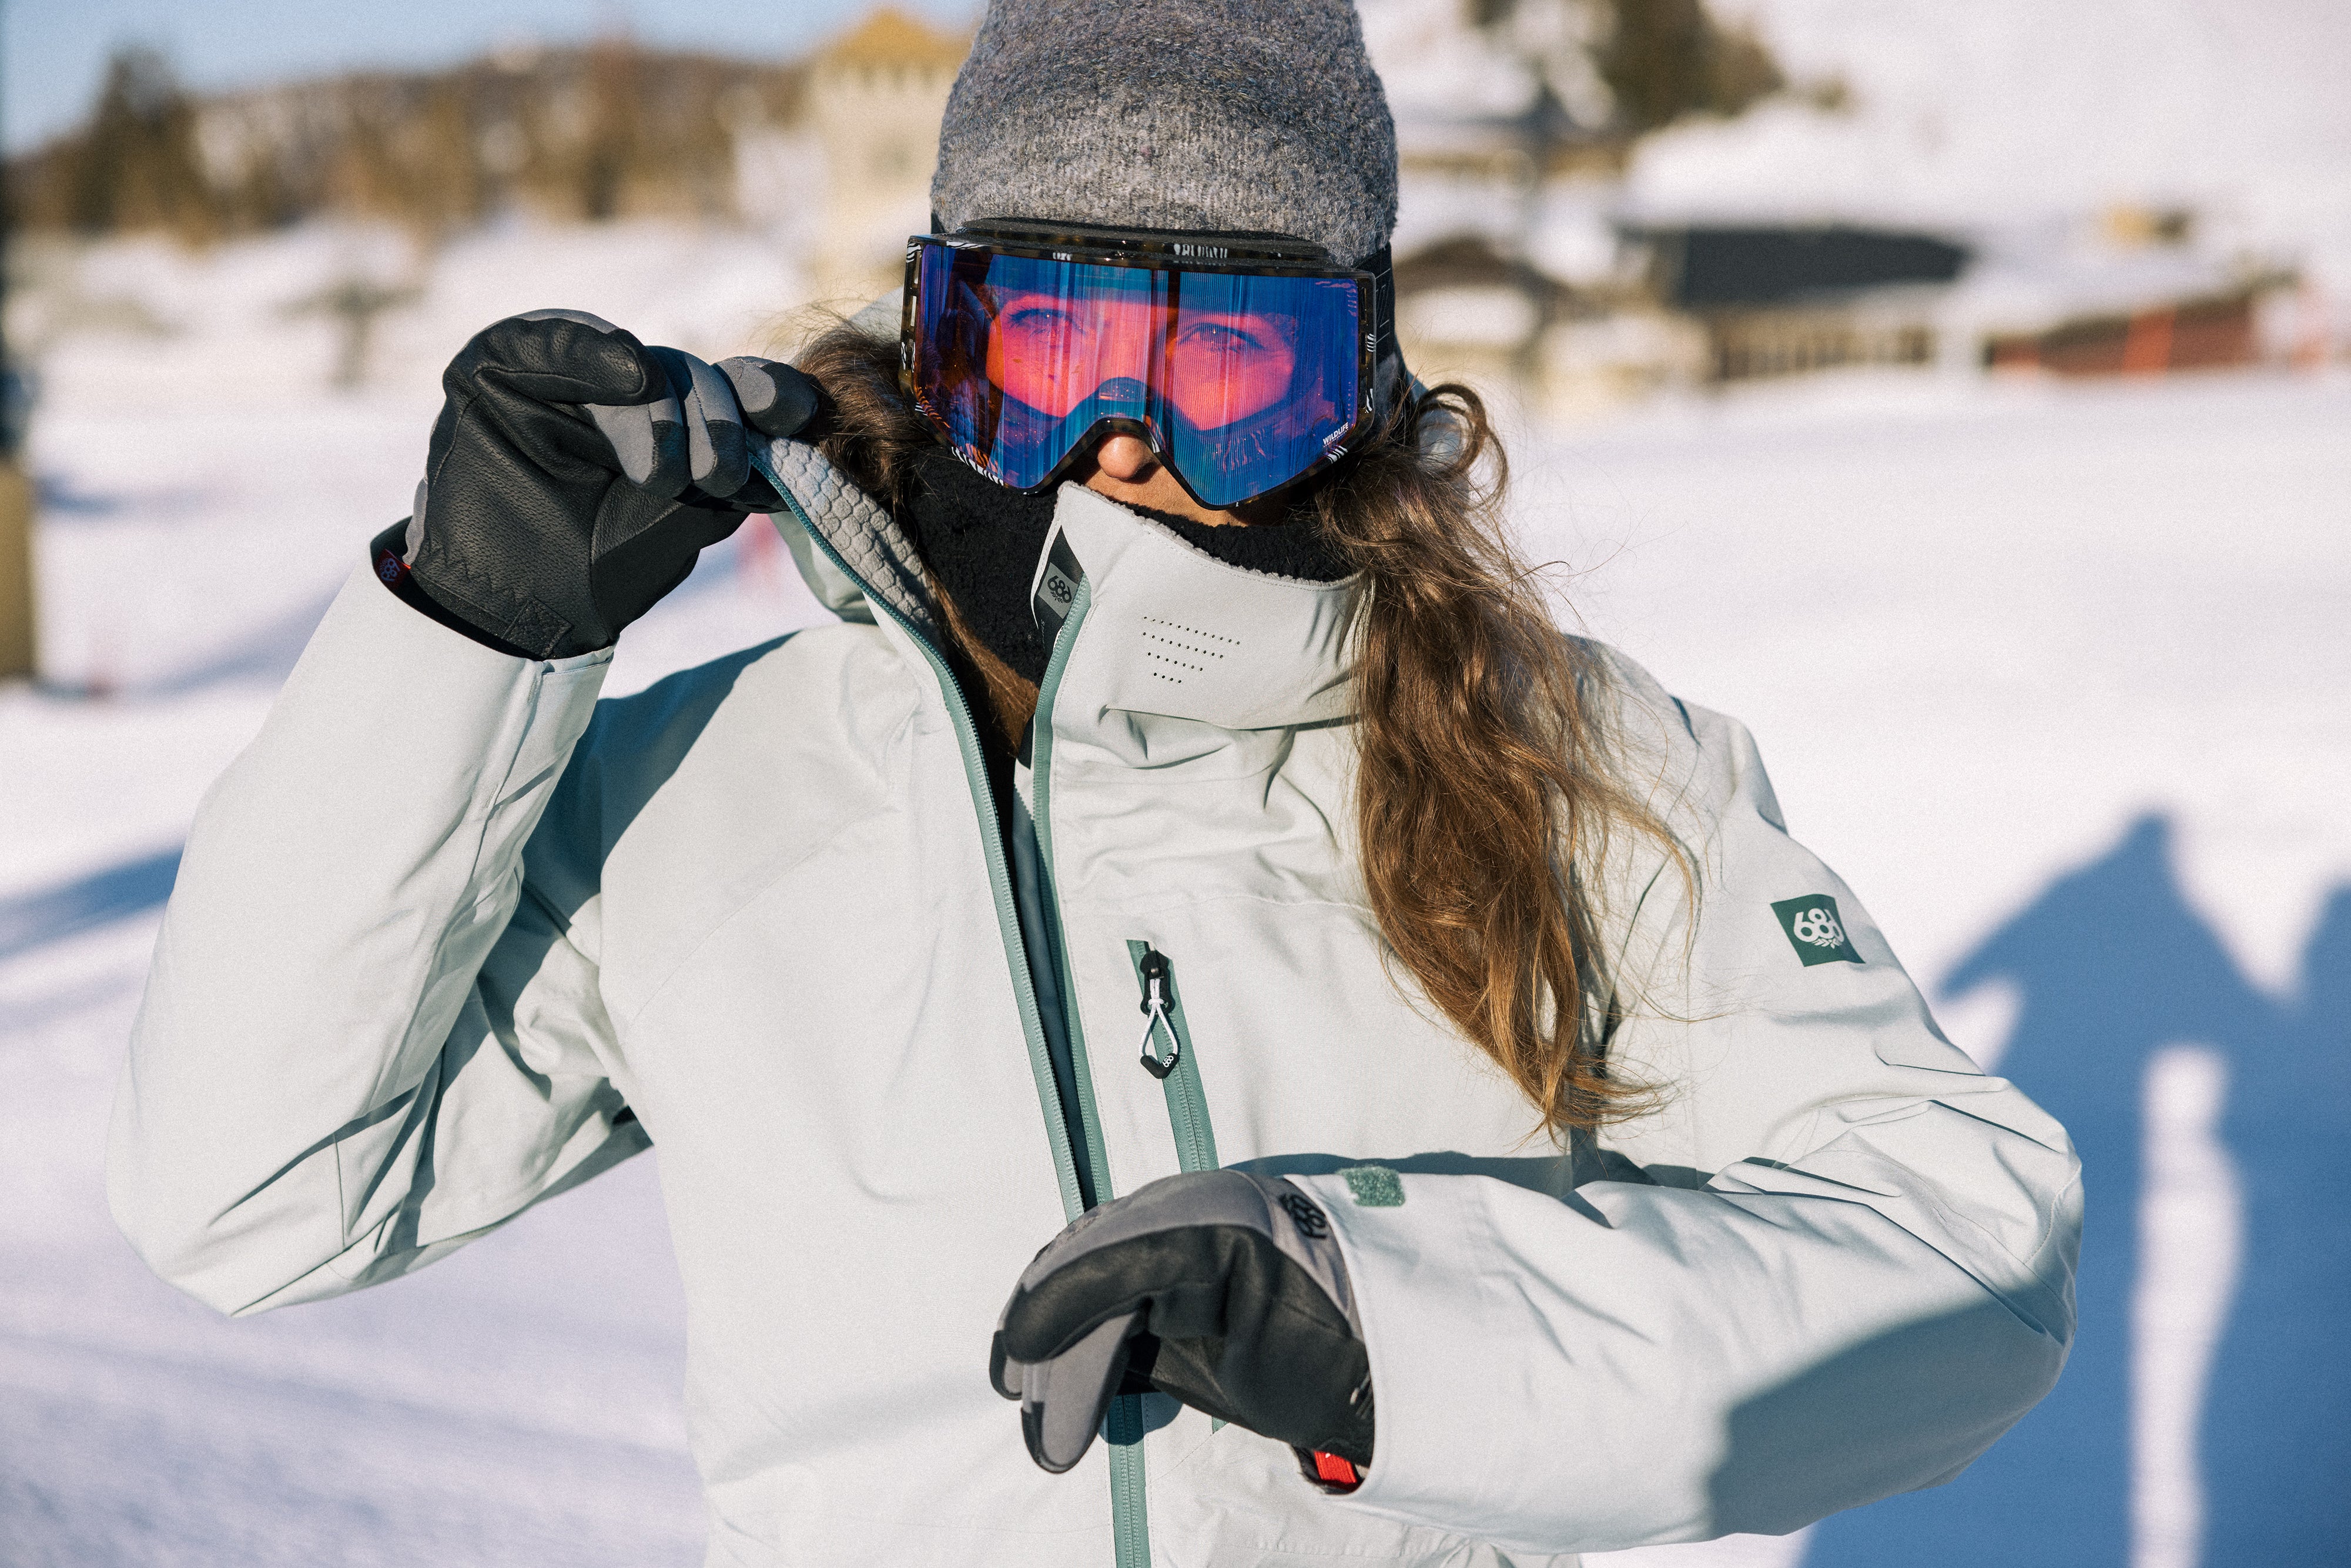 UtahSkis | Ski & Snowboard Gear, Clothing, and Accessories